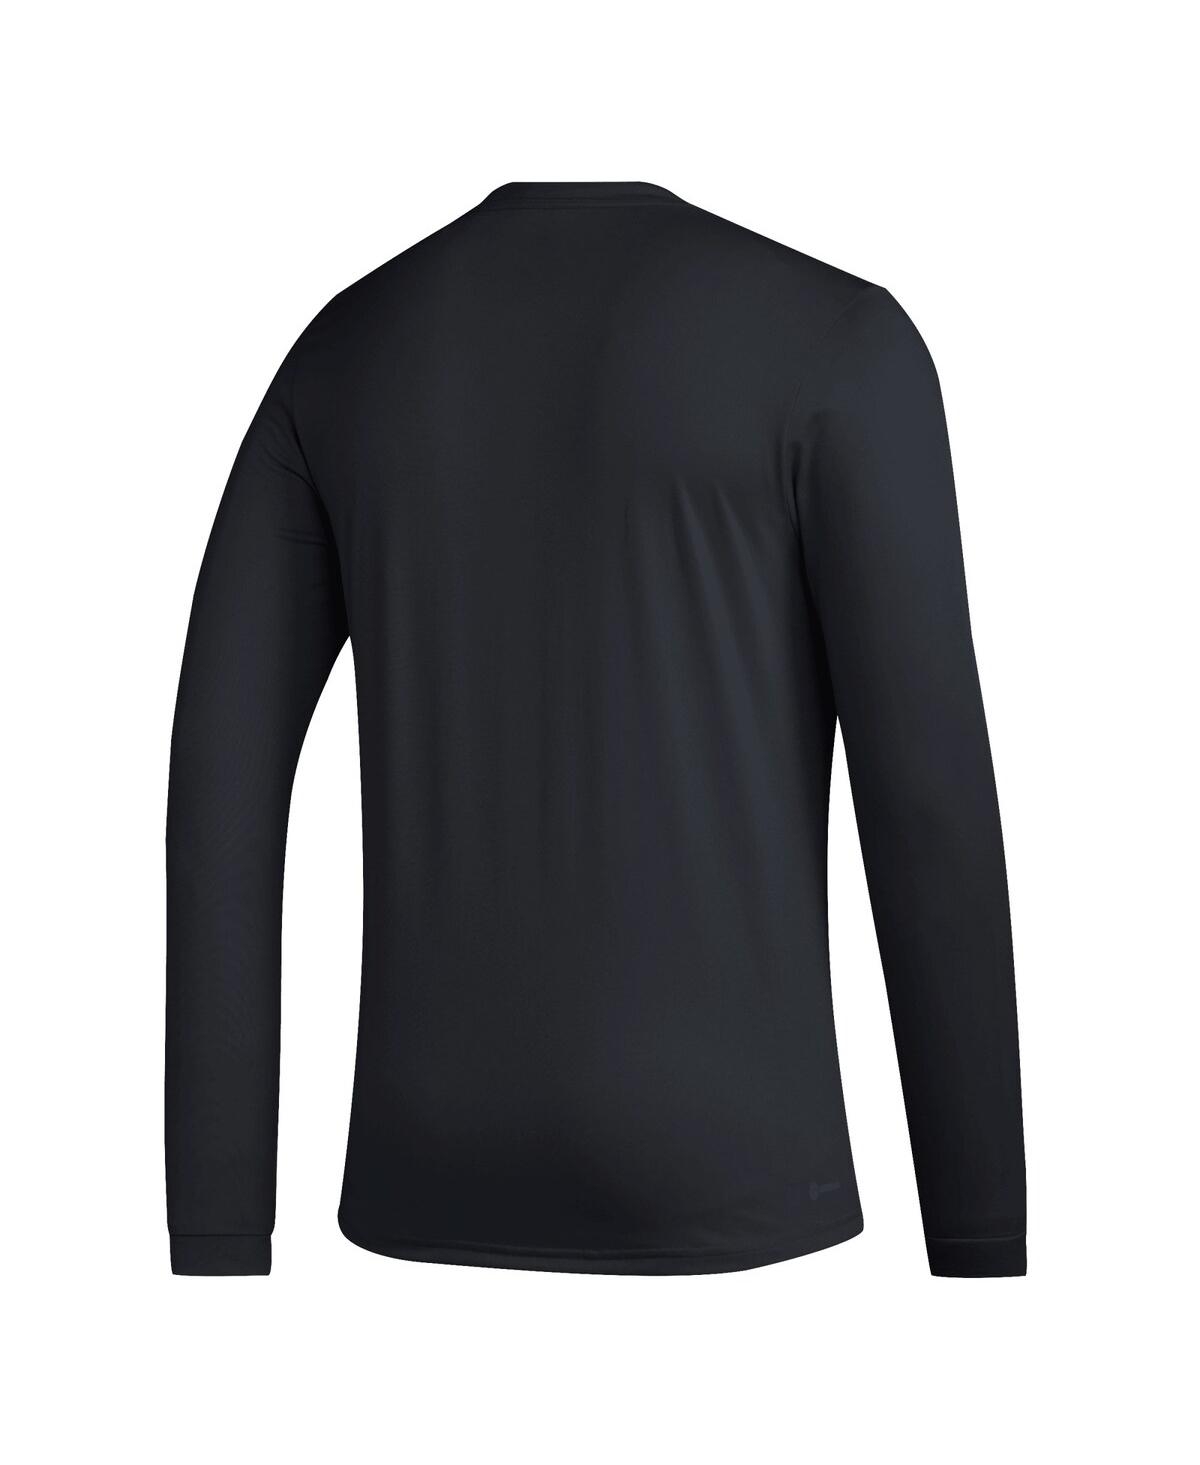 Shop Adidas Originals Men's Adidas Black San Jose Earthquakes Club Dna Long Sleeve T-shirt